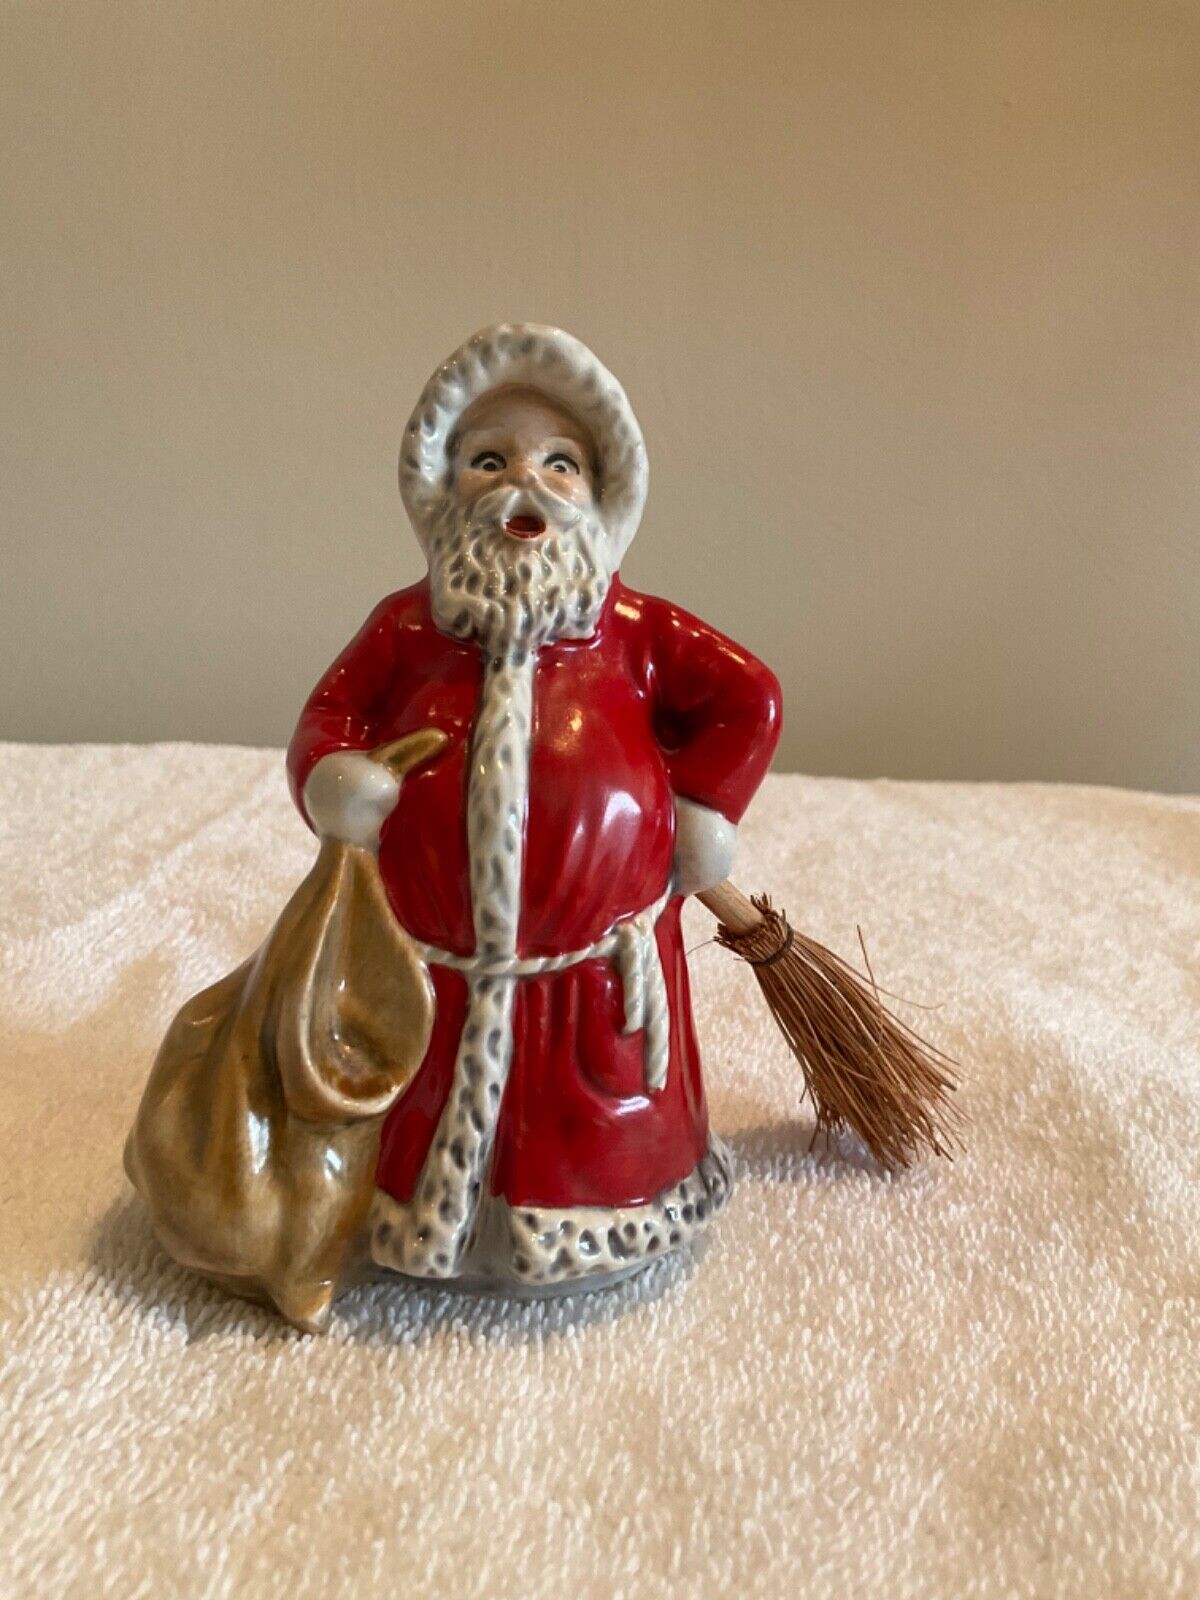 1975 Goebel Hummel Santa Figurine "With Broom" #7975 West Germany 44 350-09 Rare